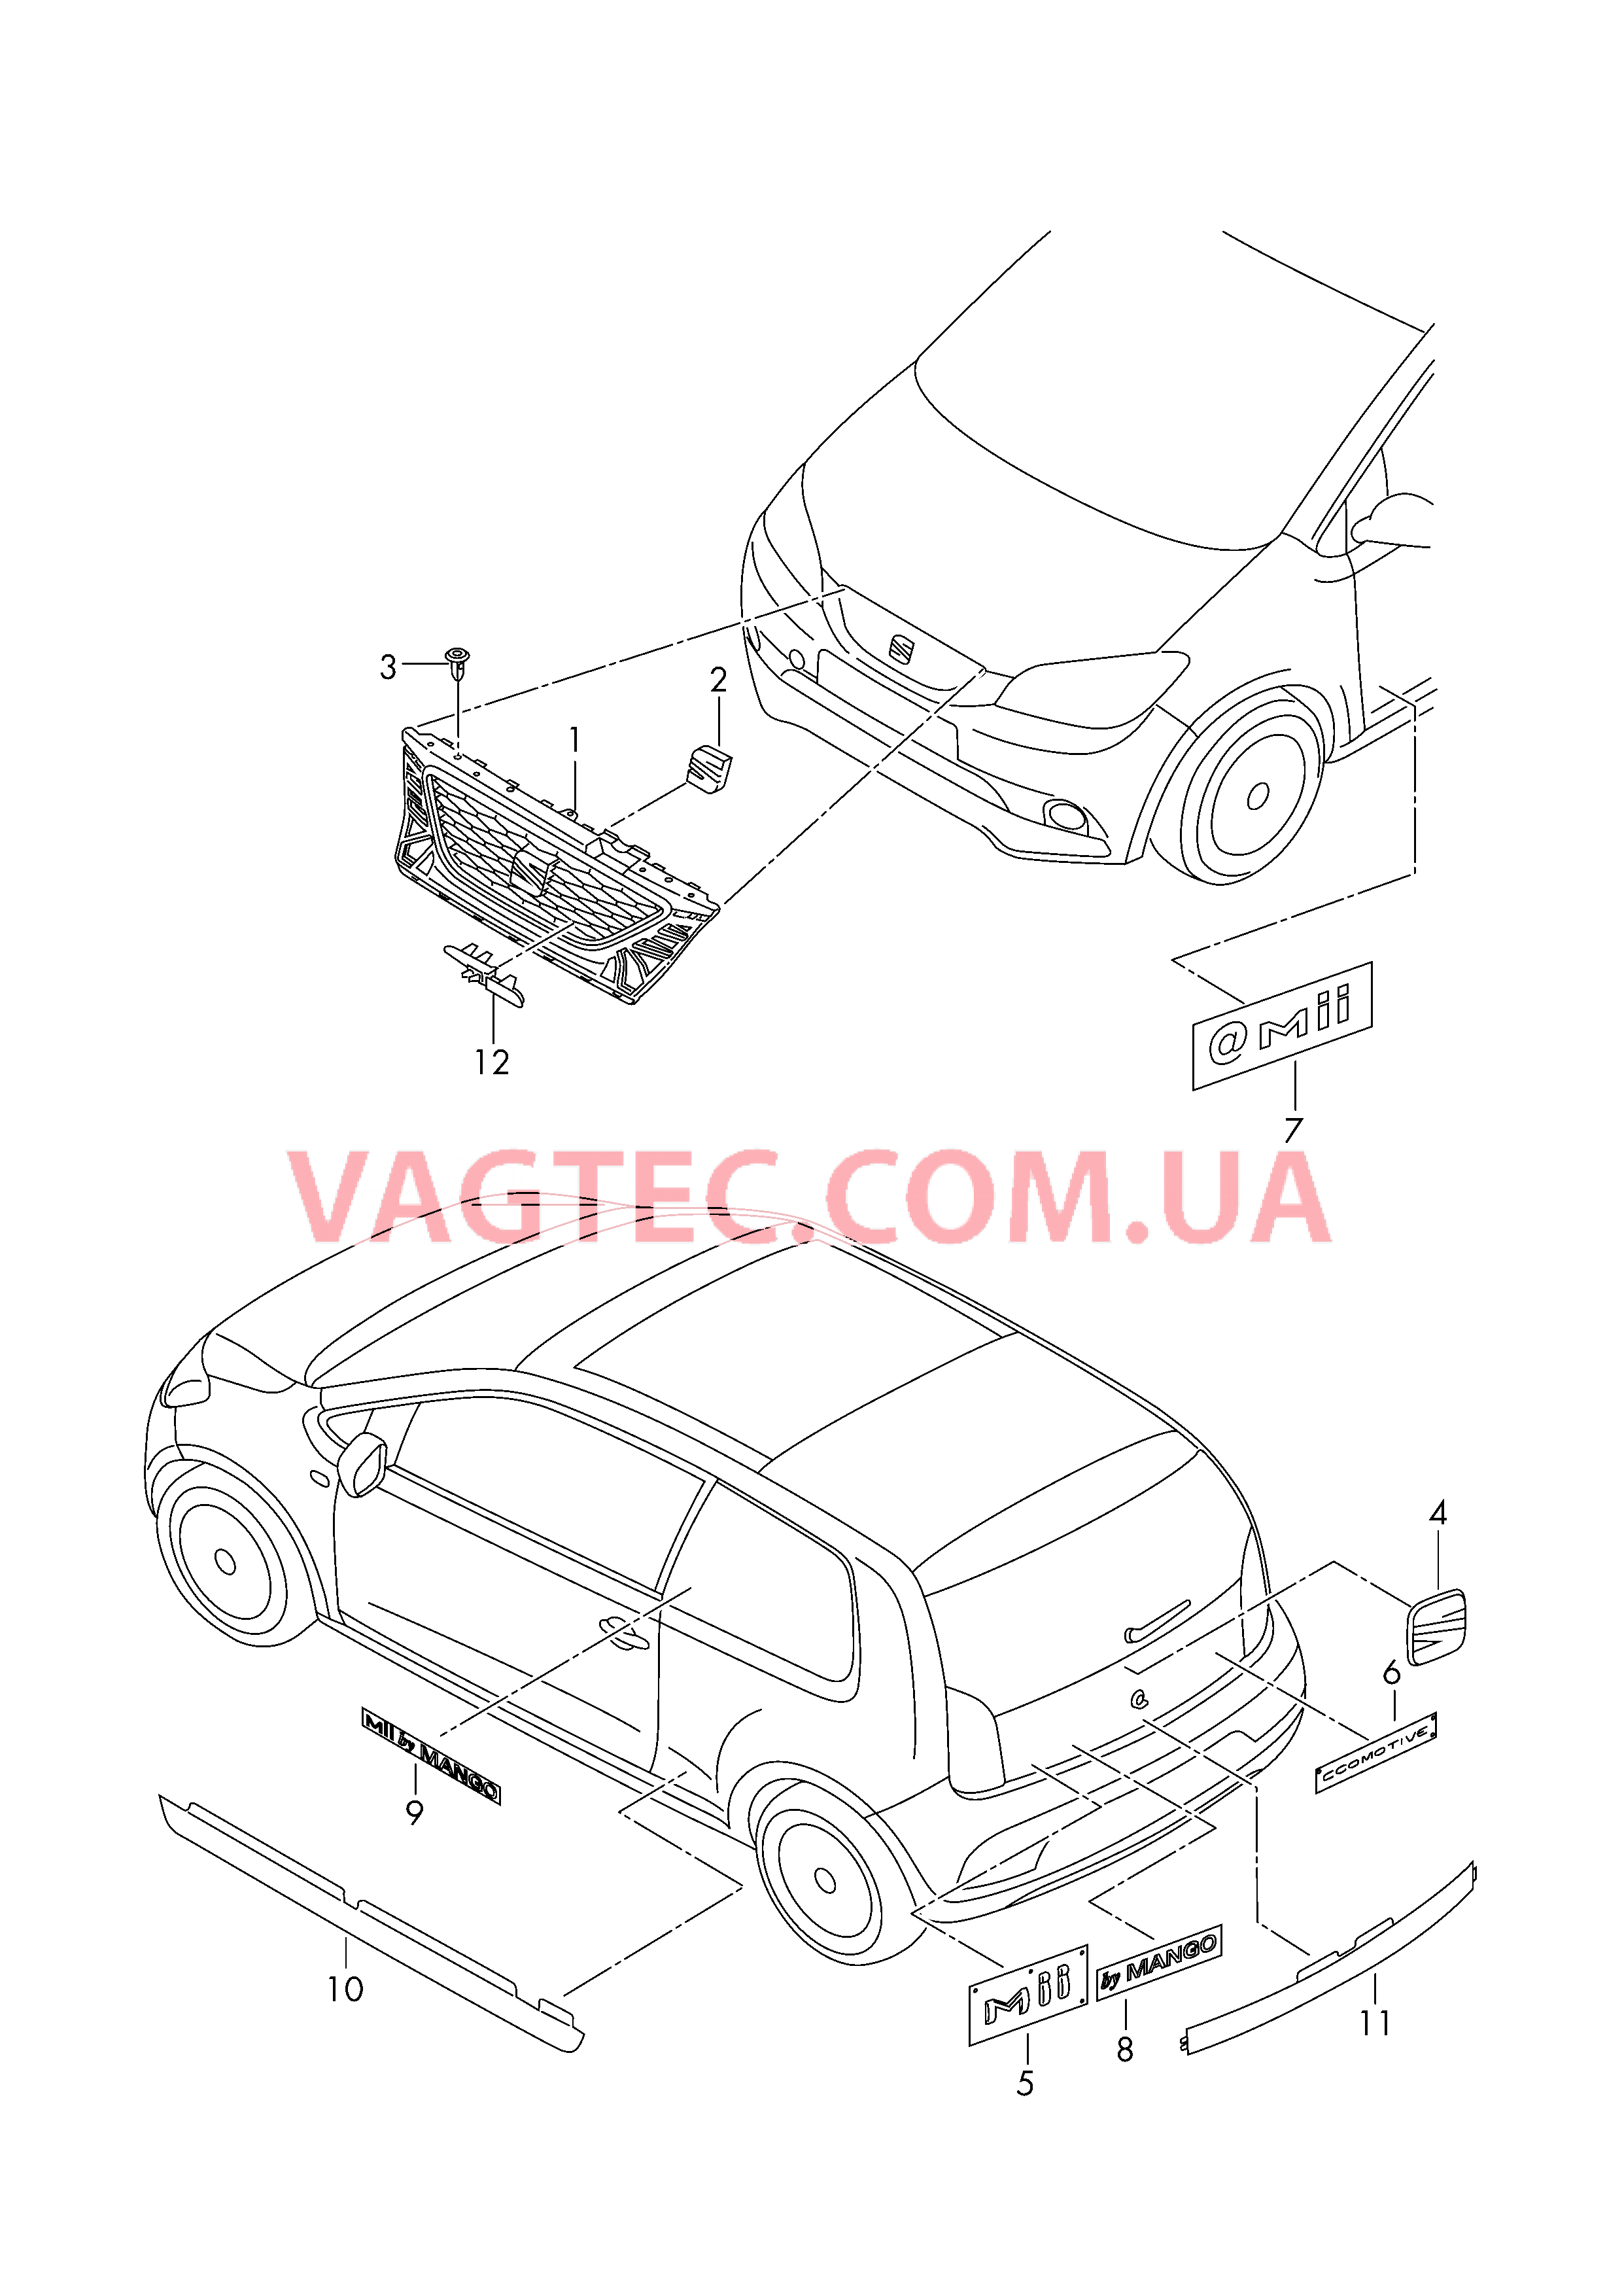 Решётка радиатора Надписи Брелок  для SEAT MI 2014